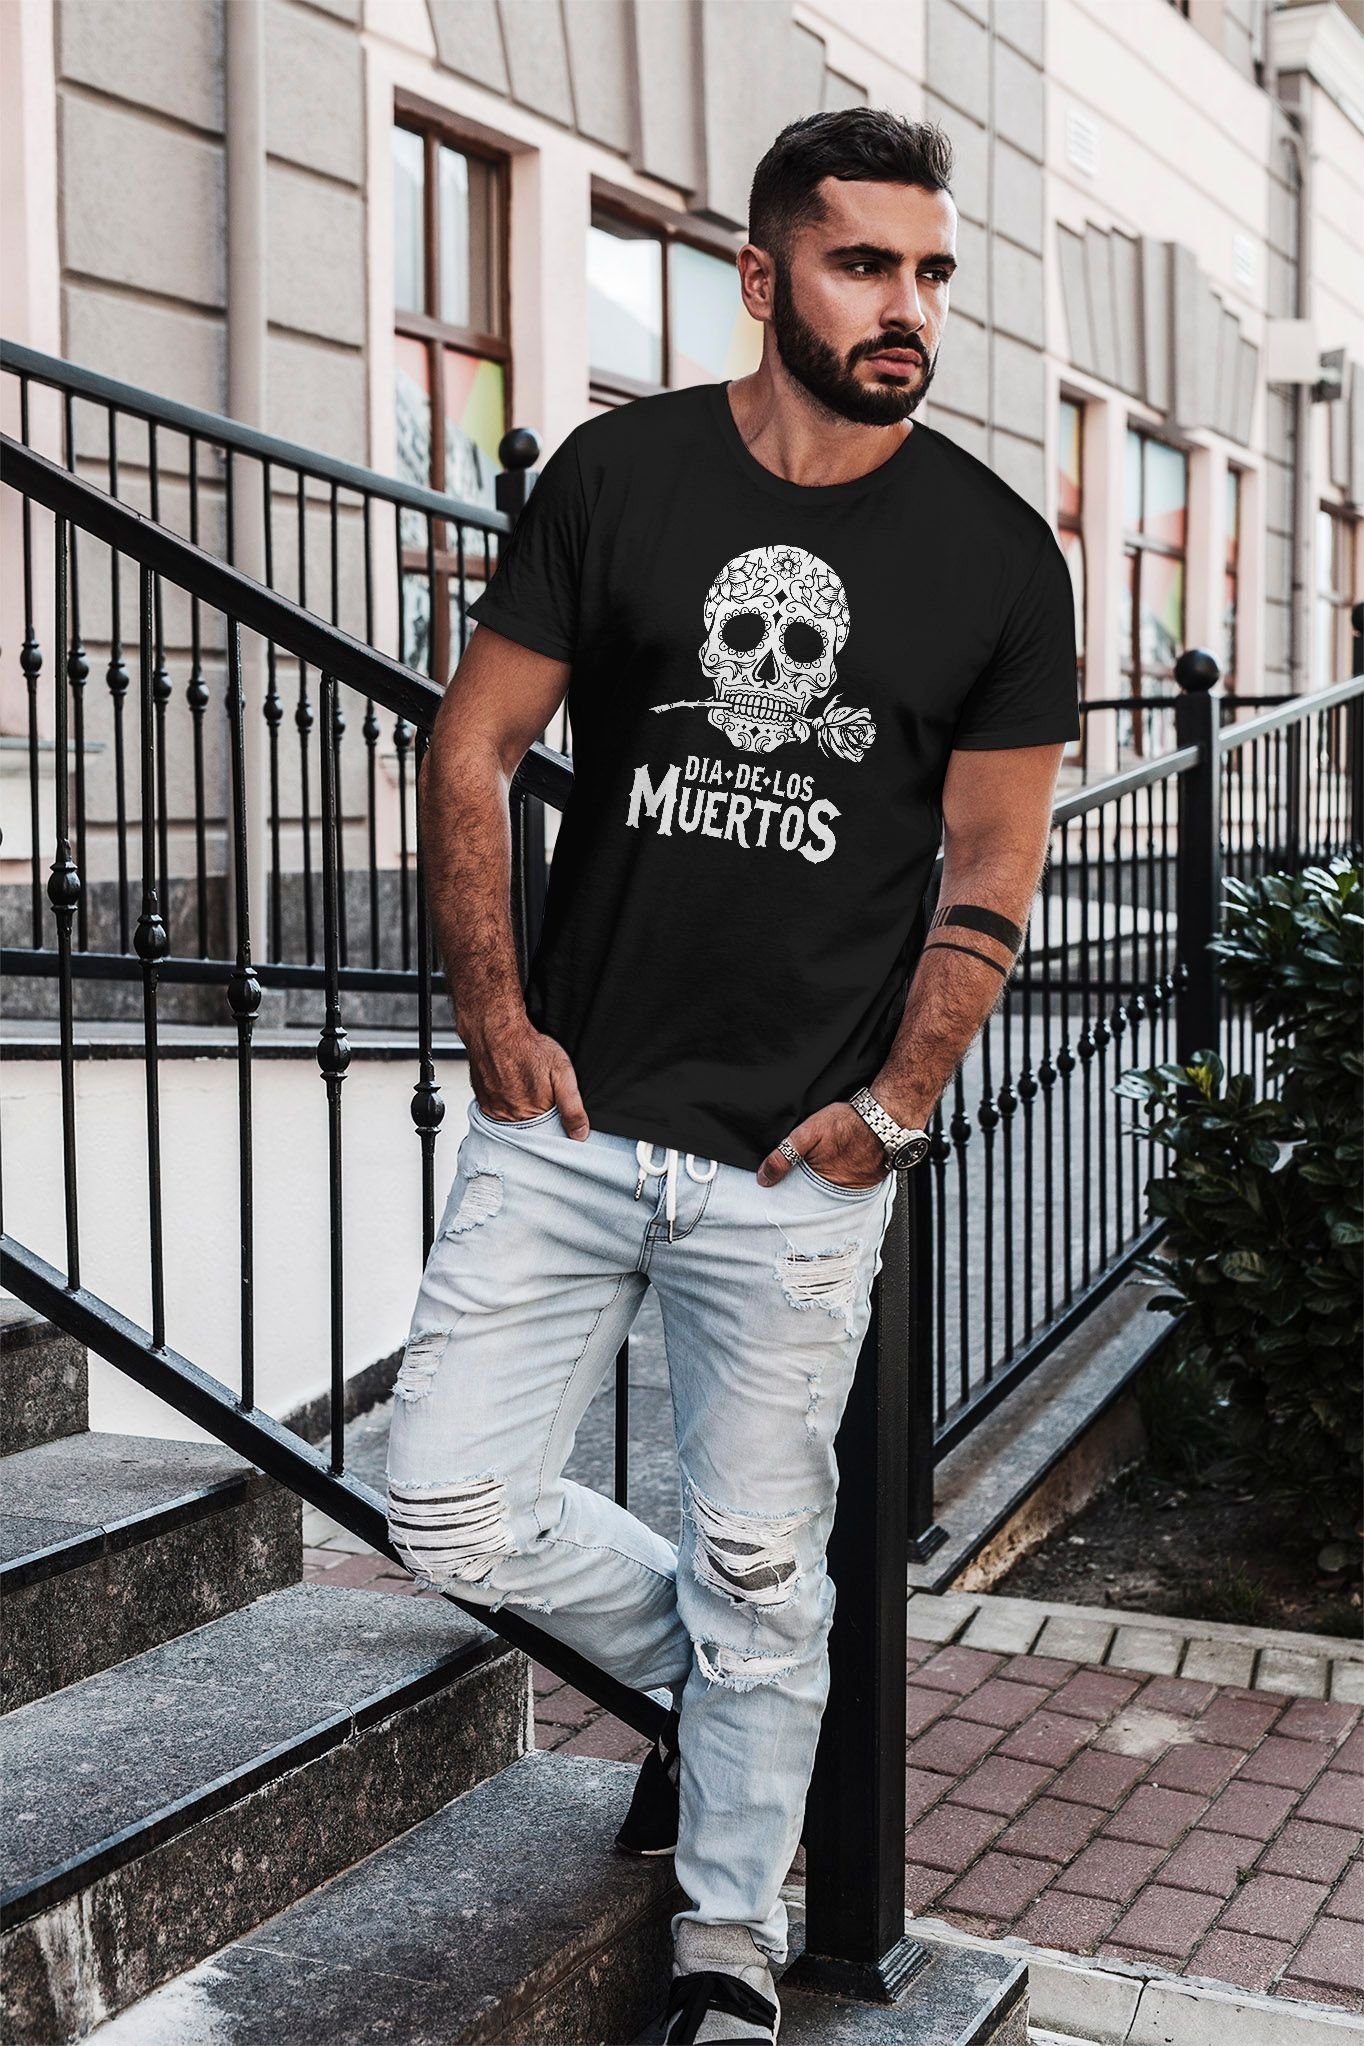 Neverless® Neverless Print-Shirt Sugar mit mit Print Herren Skull De T-Shirt Blumen Fit Slim Dia Muertos Los Totenkopf